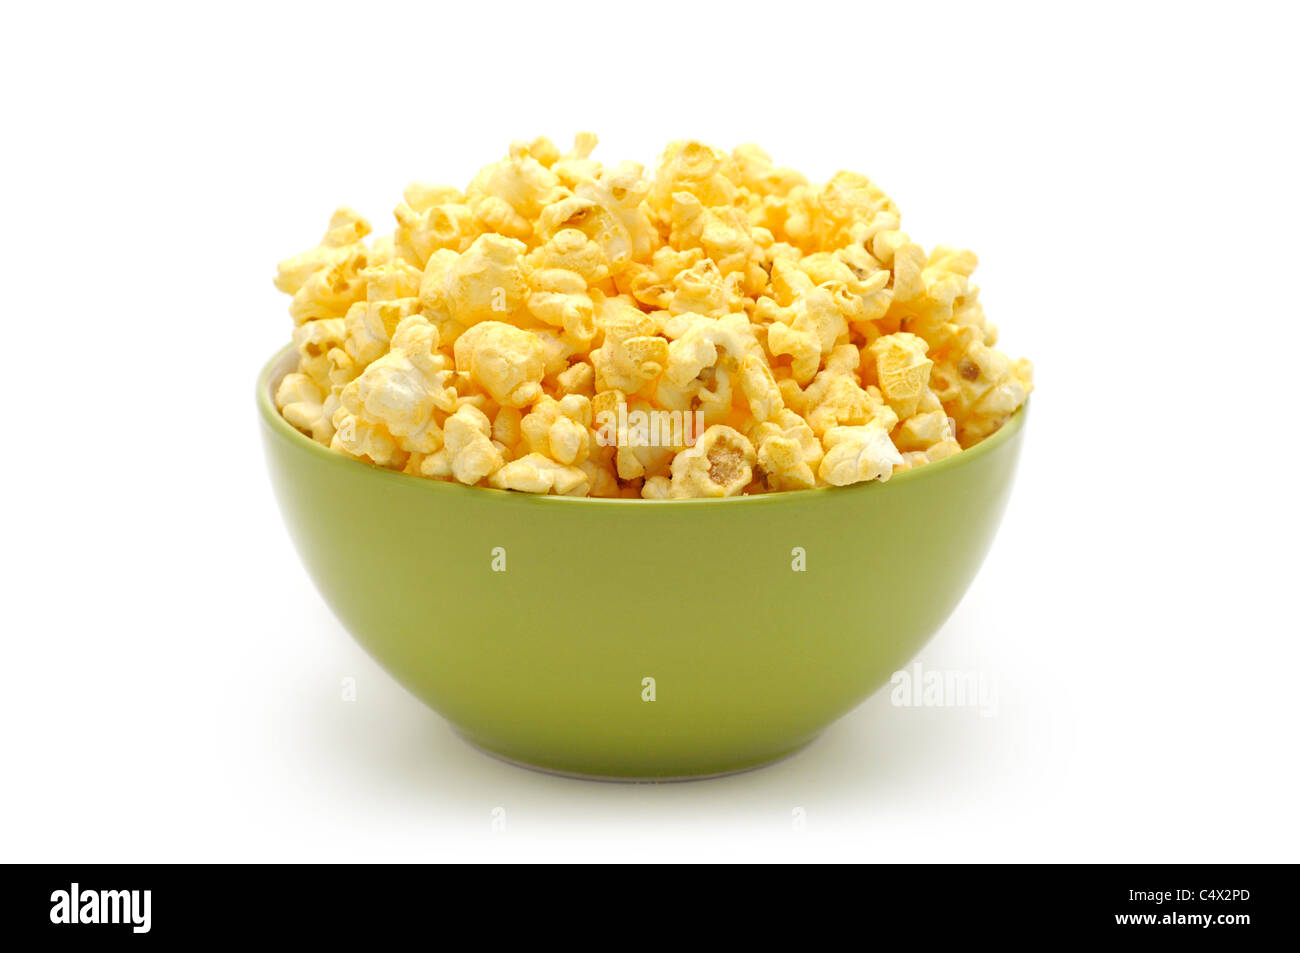 Bowl of Popcorn, Bowl of Gluten Free, Organic Popcorn Stock Photo